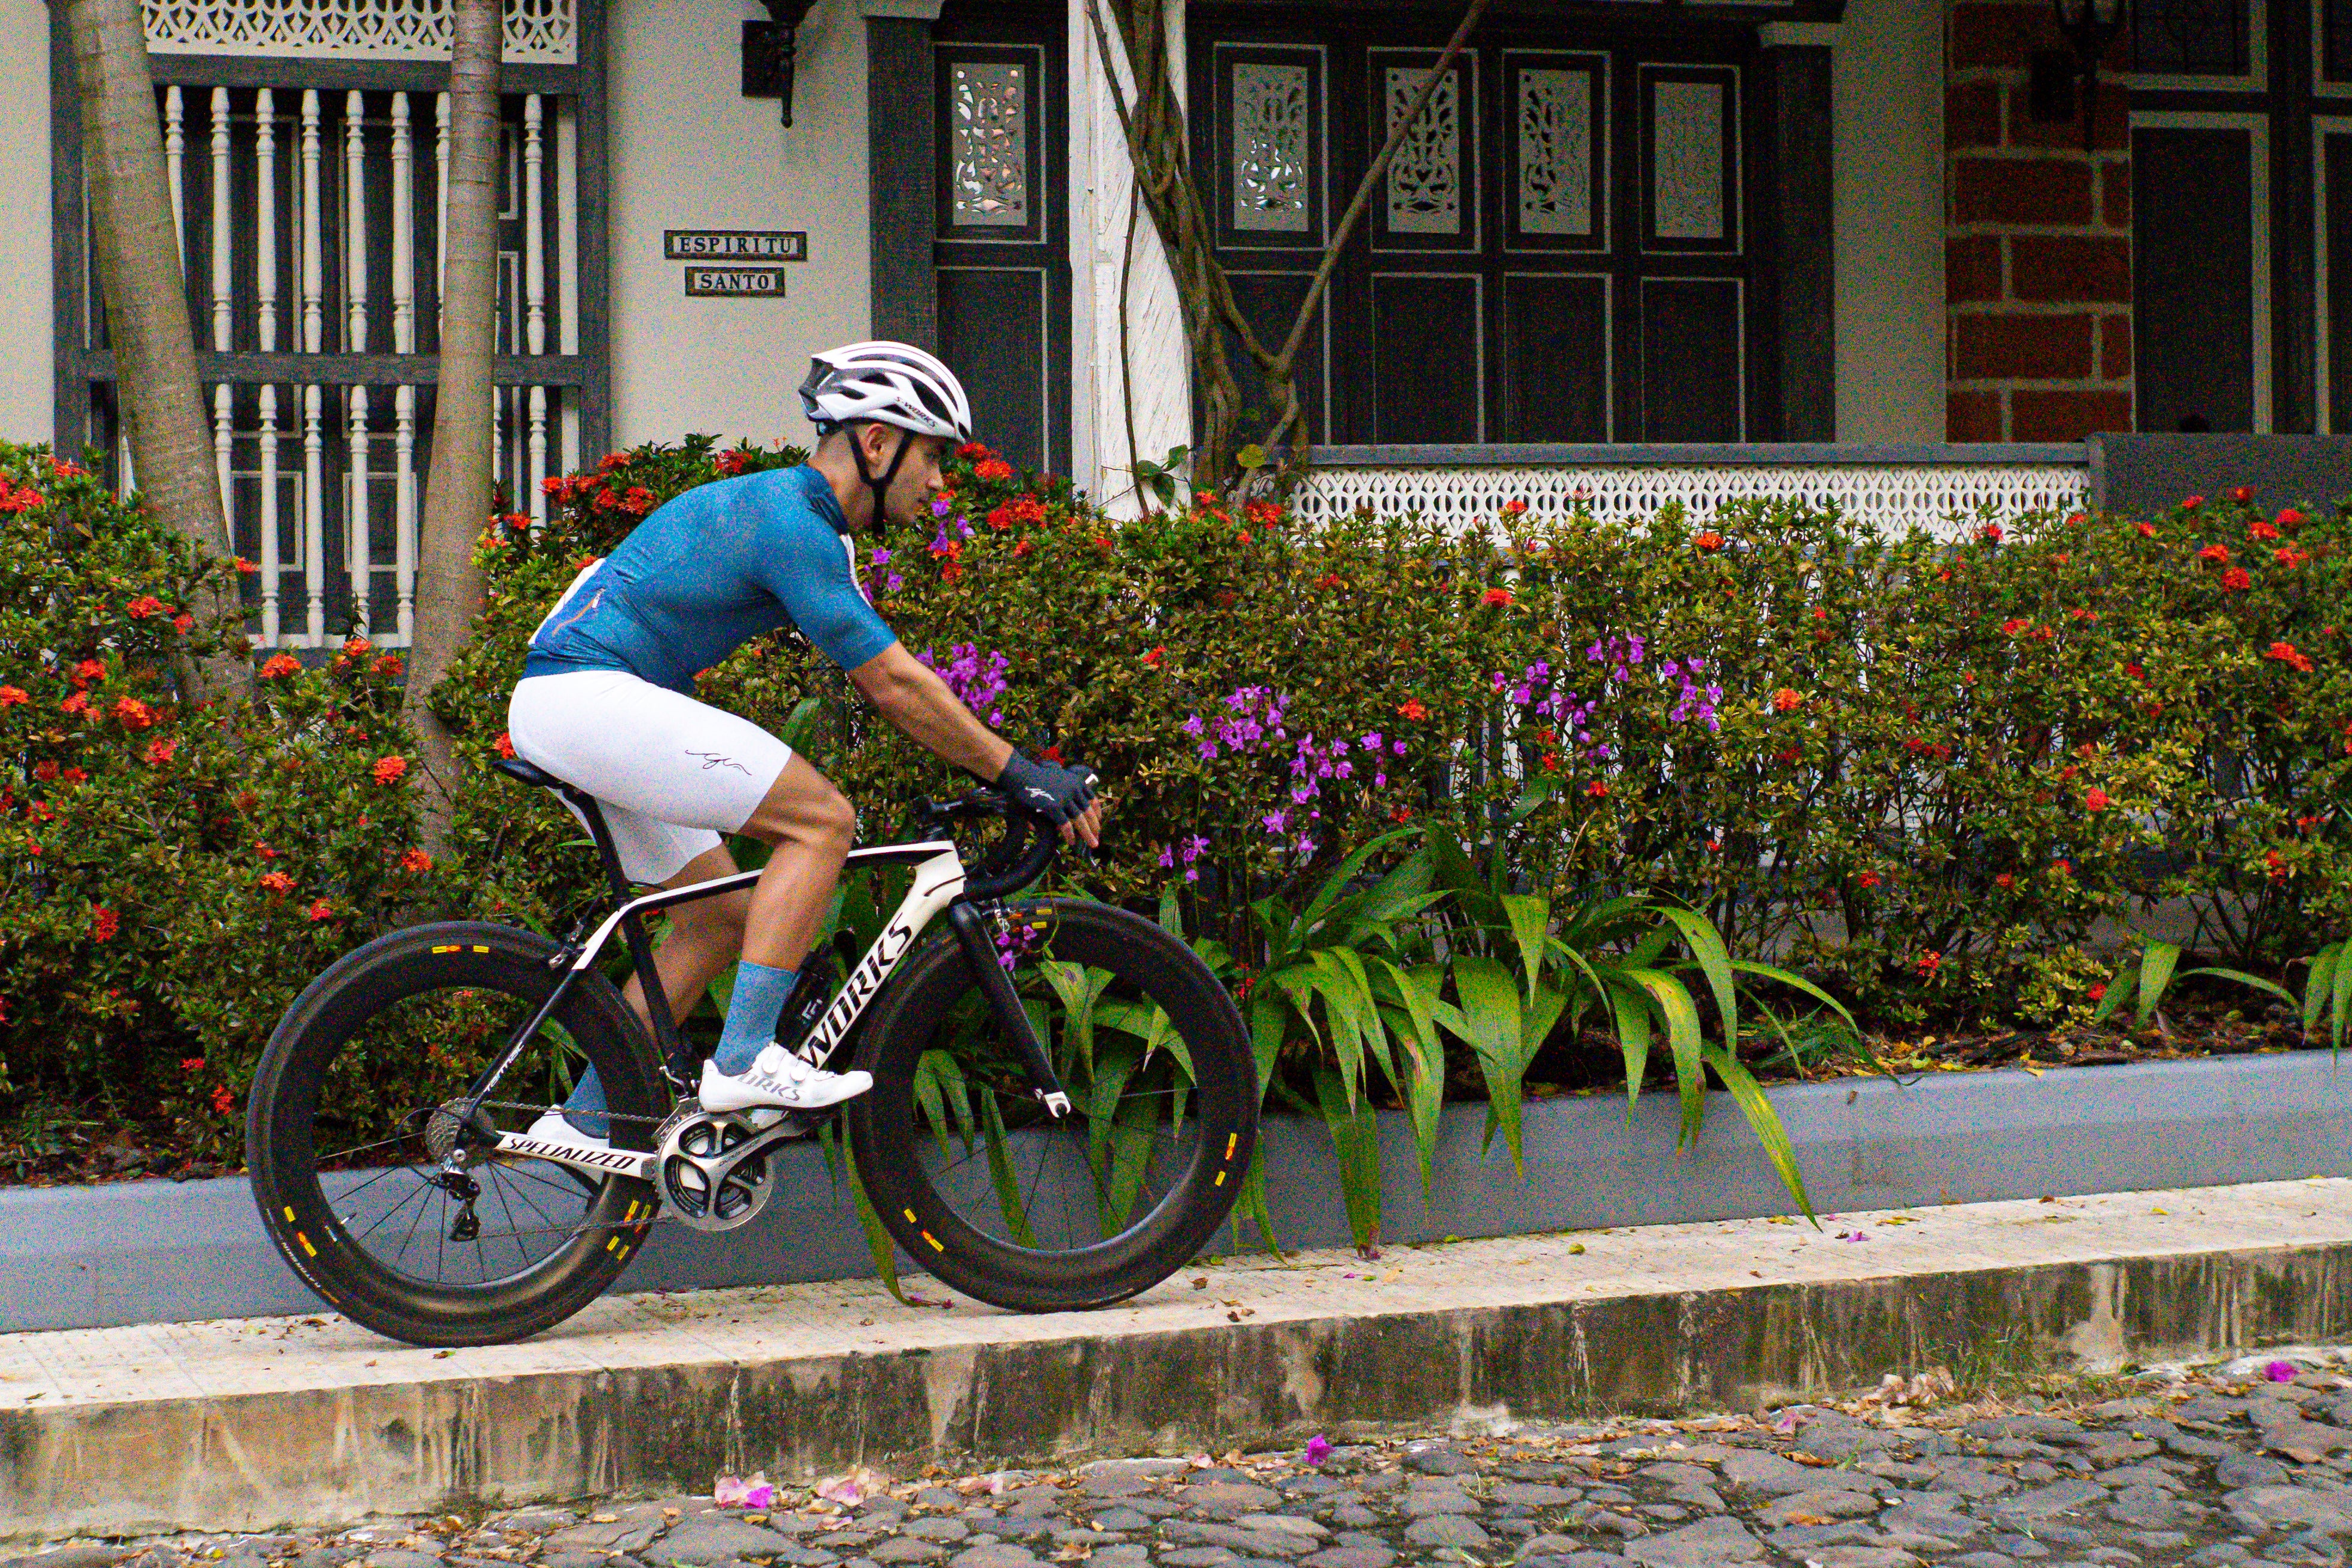 Bike Selection Criteria for Optimal Cycling Performance